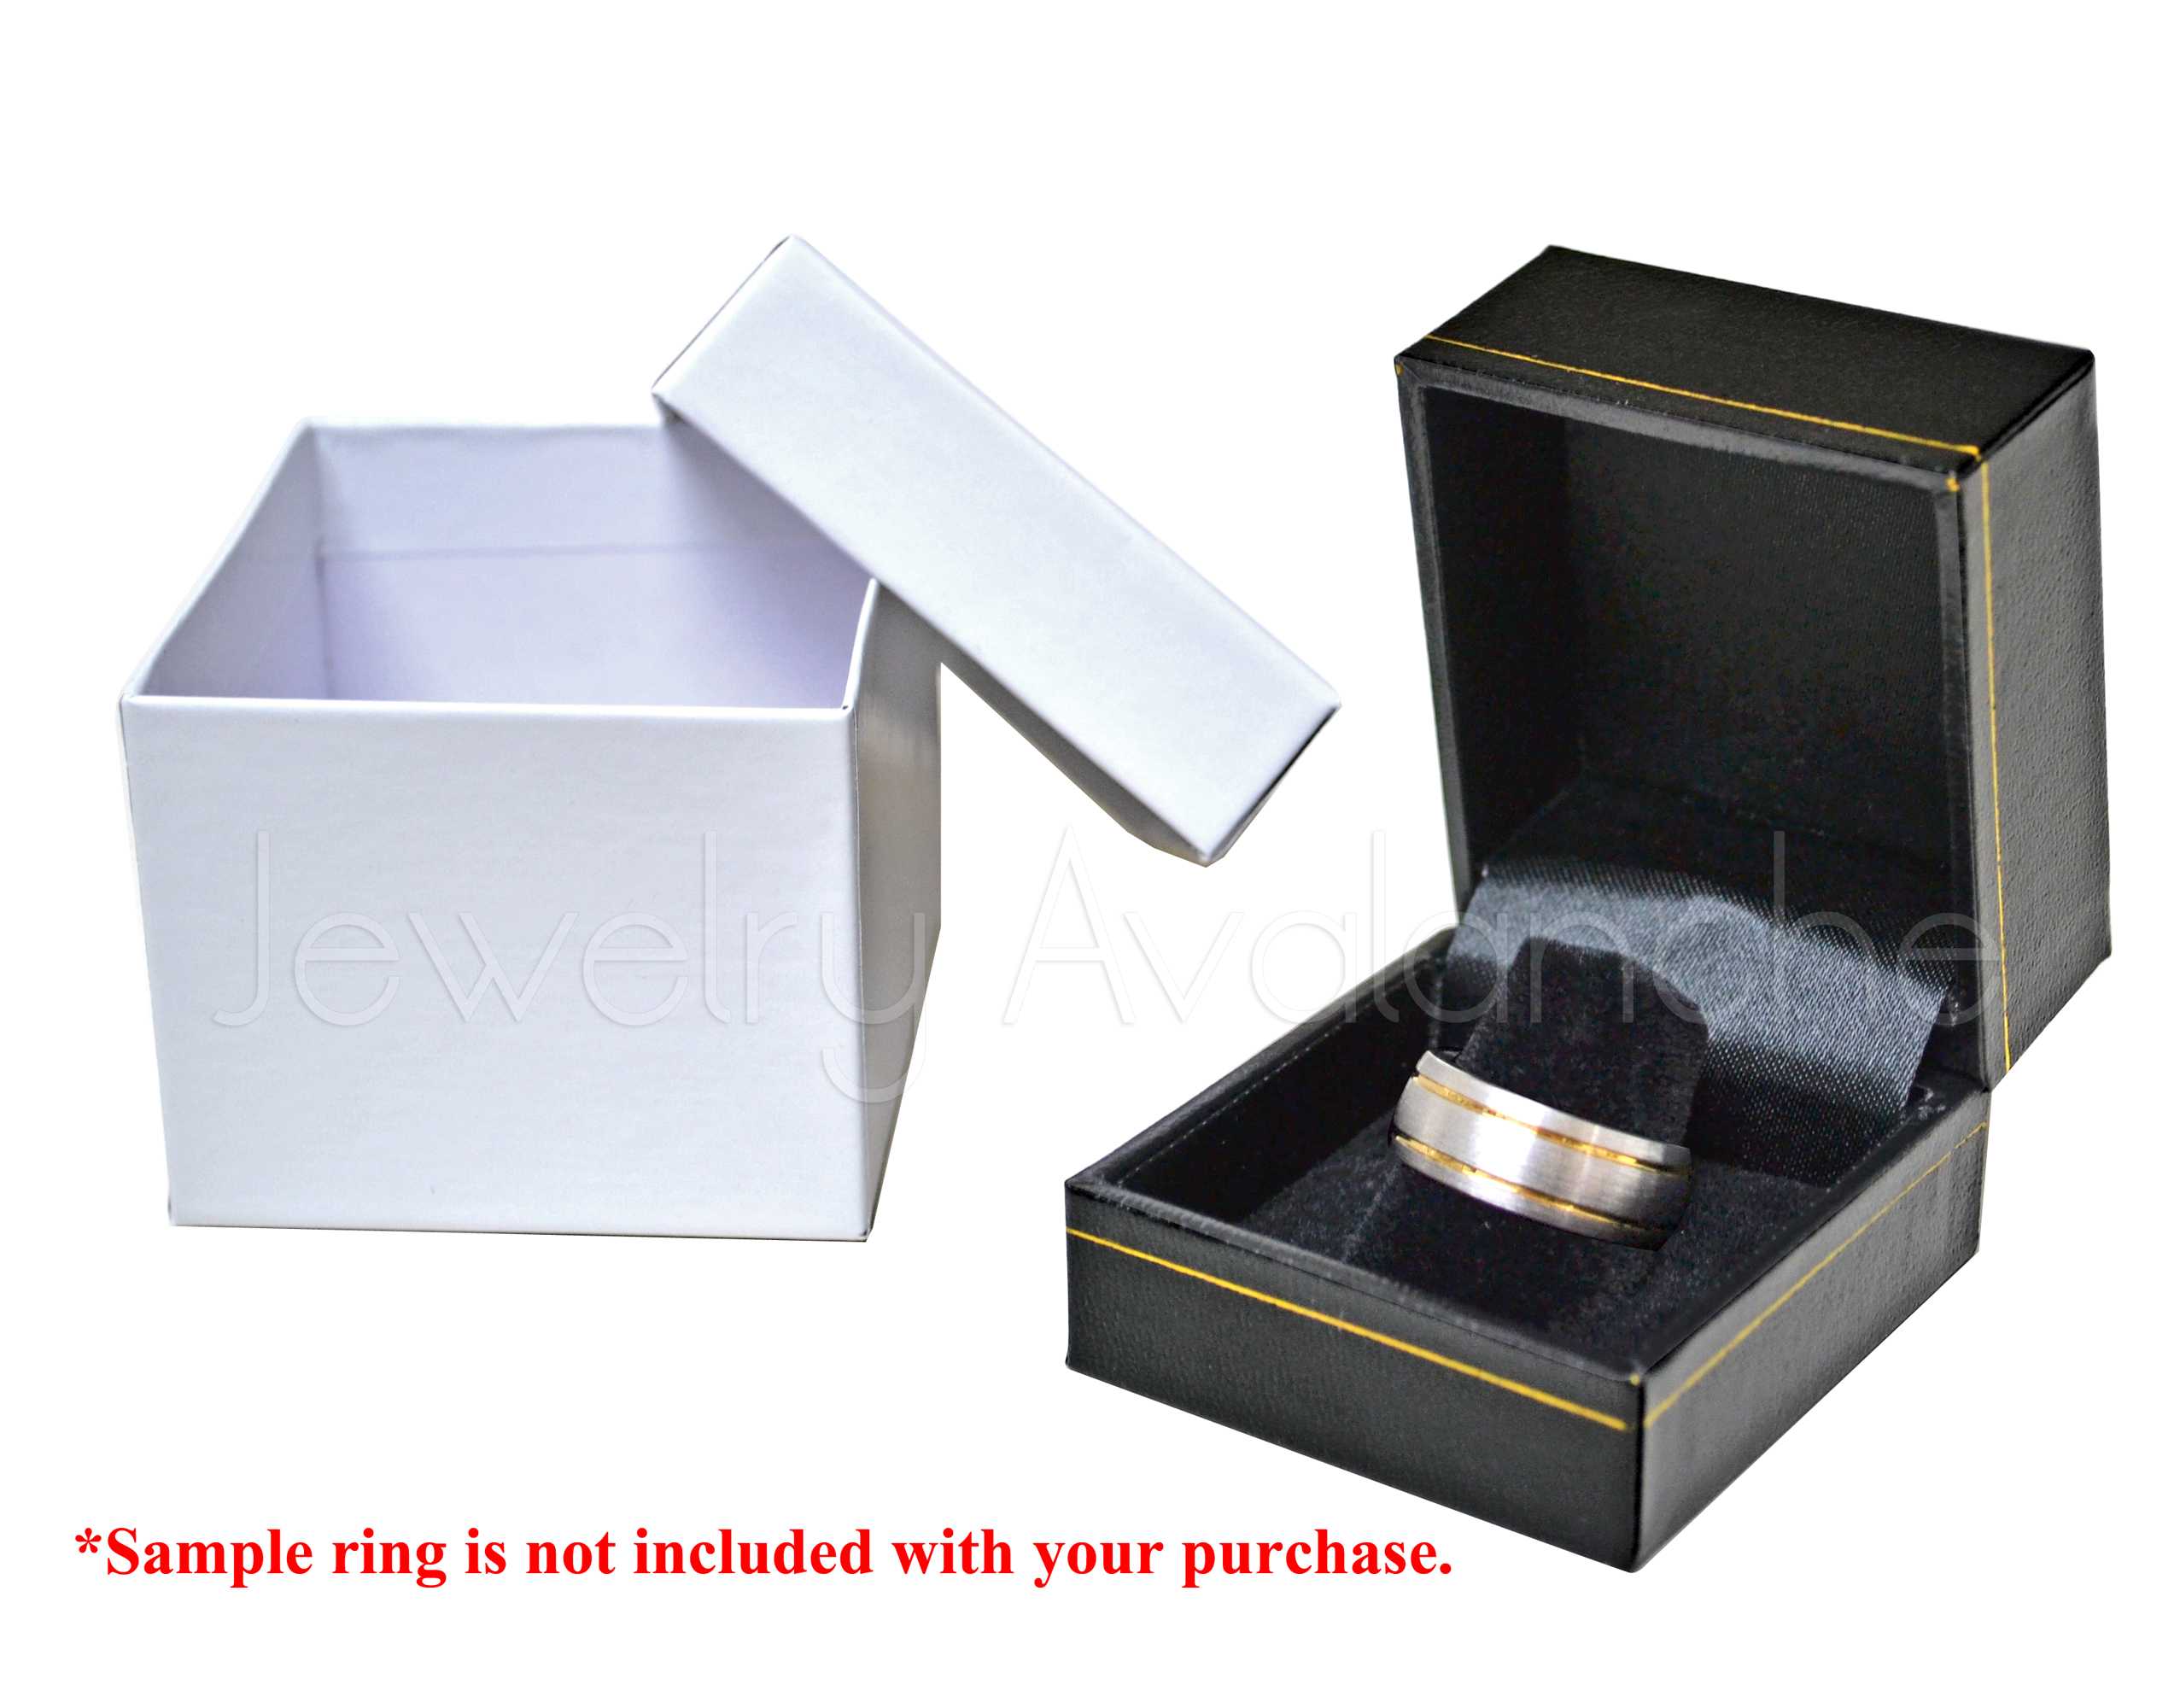 JA Tungsten Rings 2-Tone Hammered Tungsten Wedding Ring 8mm Black IP Tungsten Carbide Ring Anniversary Band